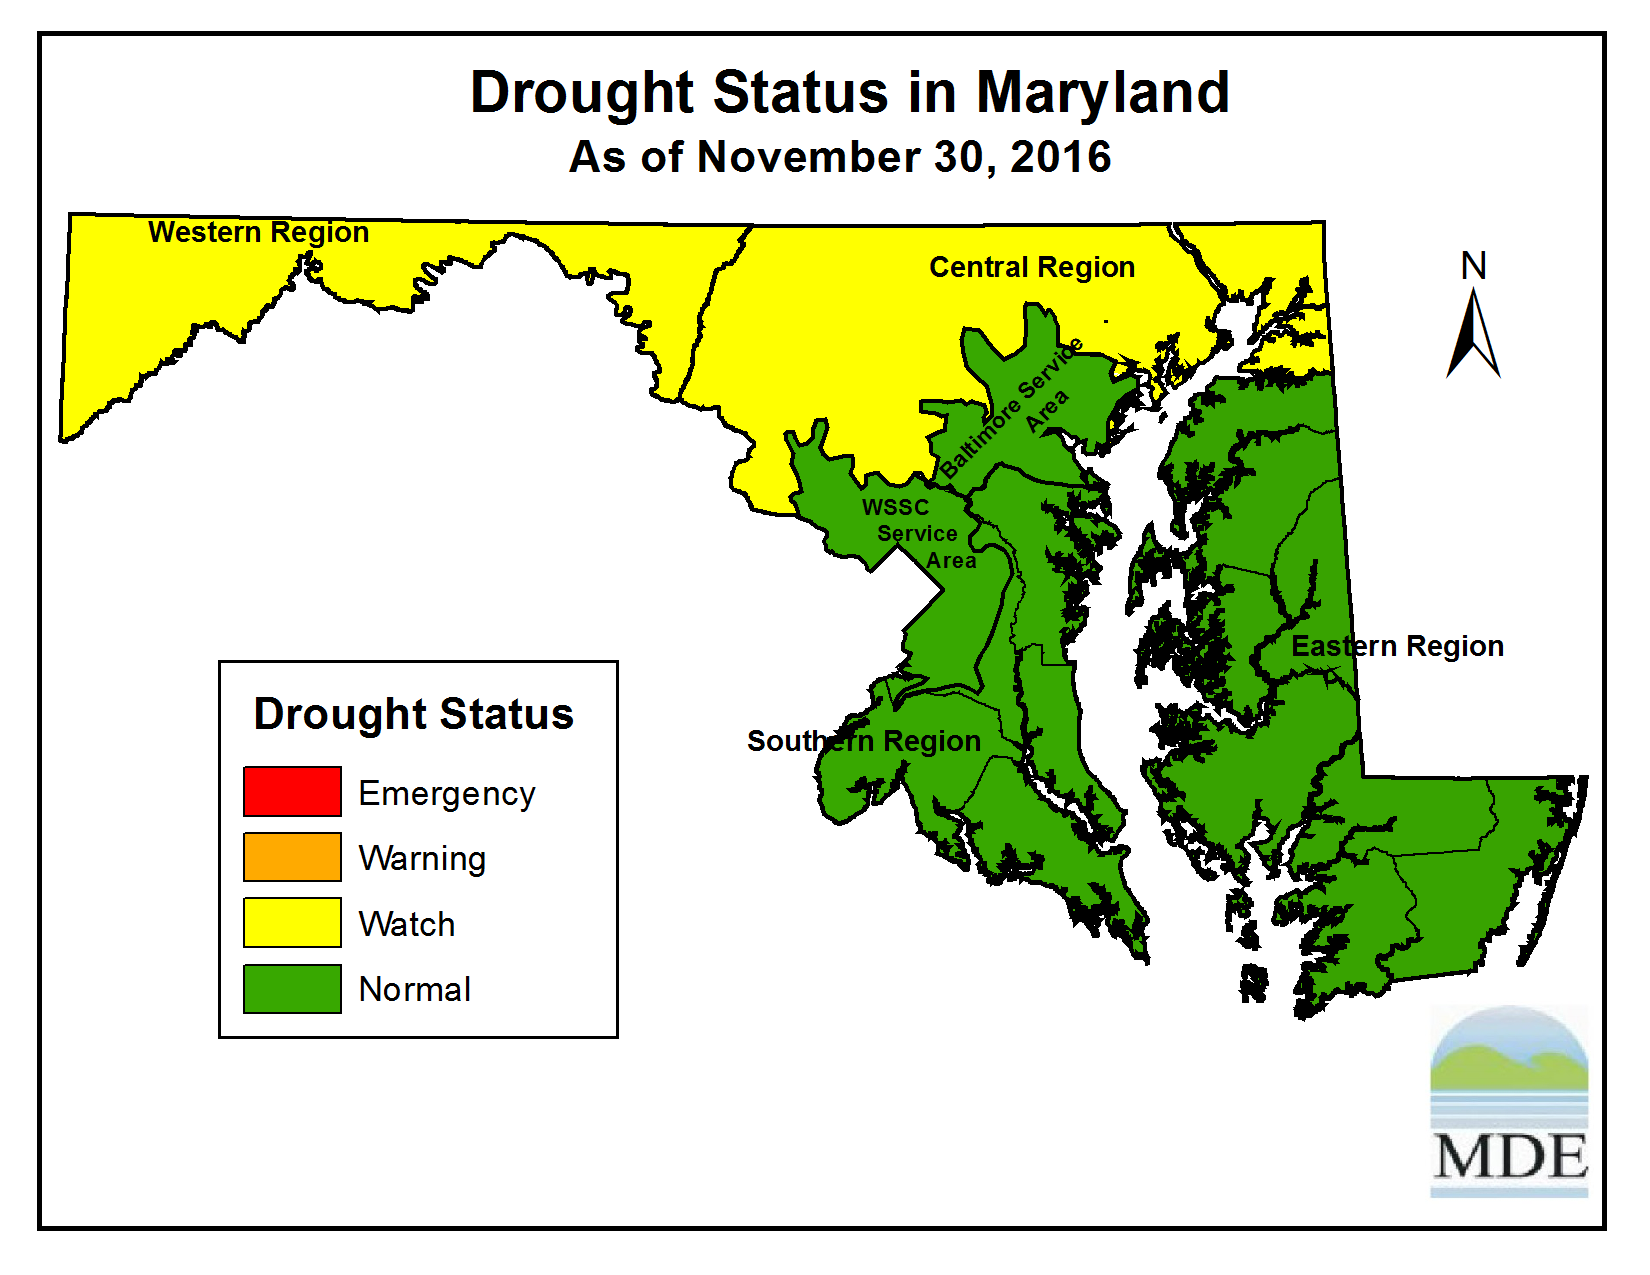 Drought Status as of November 30, 2016